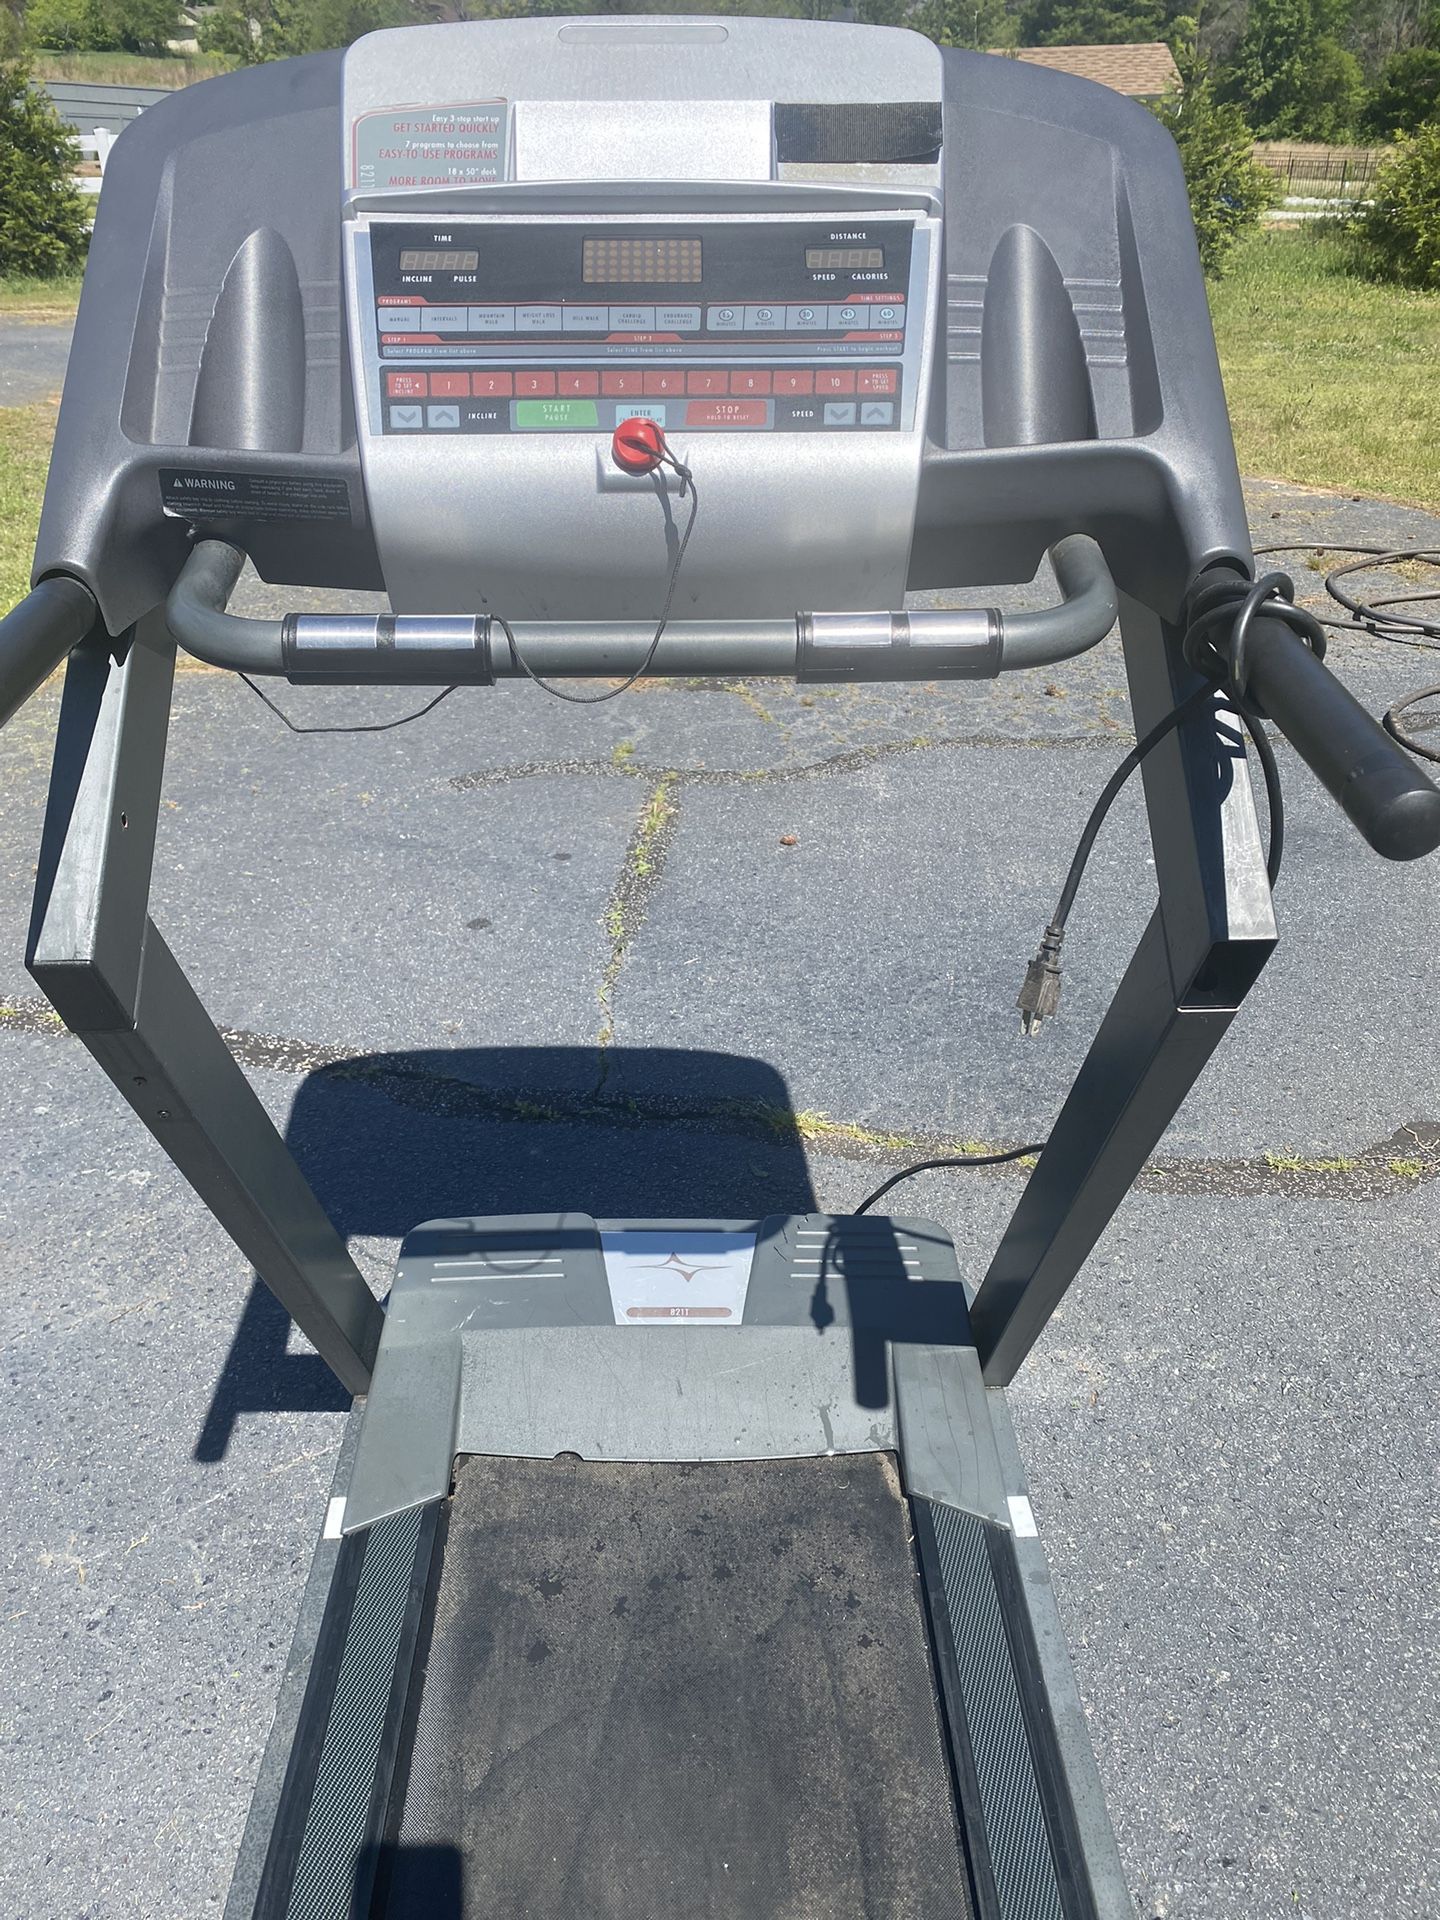 Treadmill- Flex tech- 821T